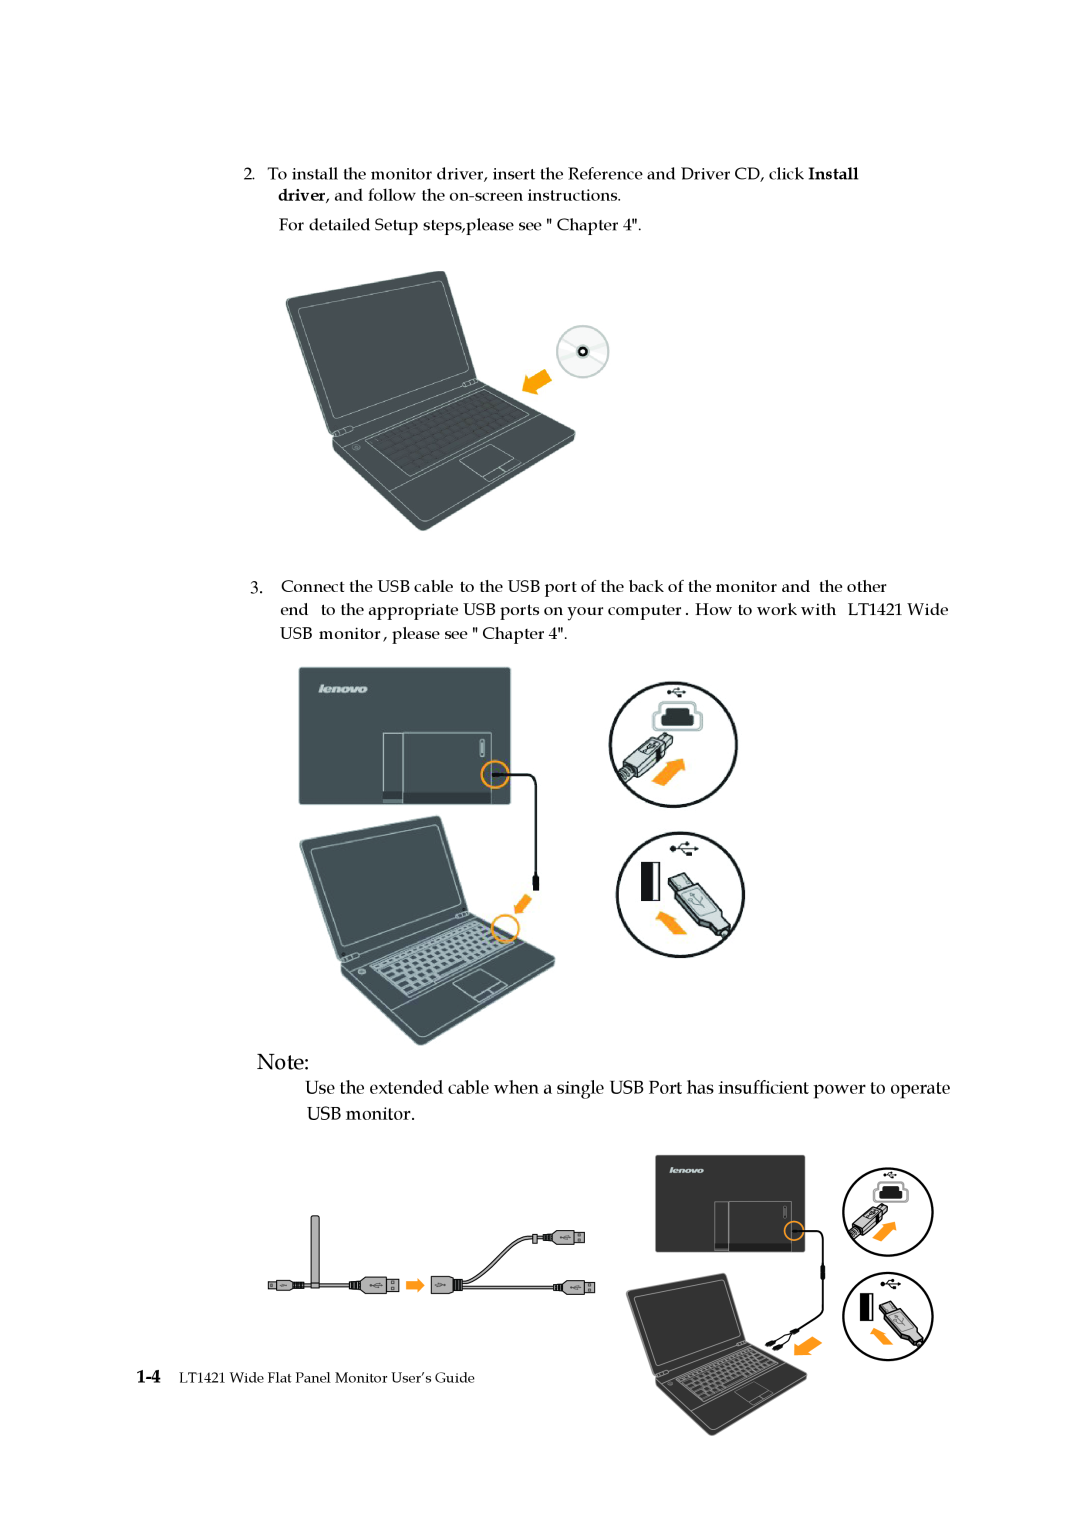 Lenovo 1452DB6 manual For detailed Setup steps,please see Chapter 